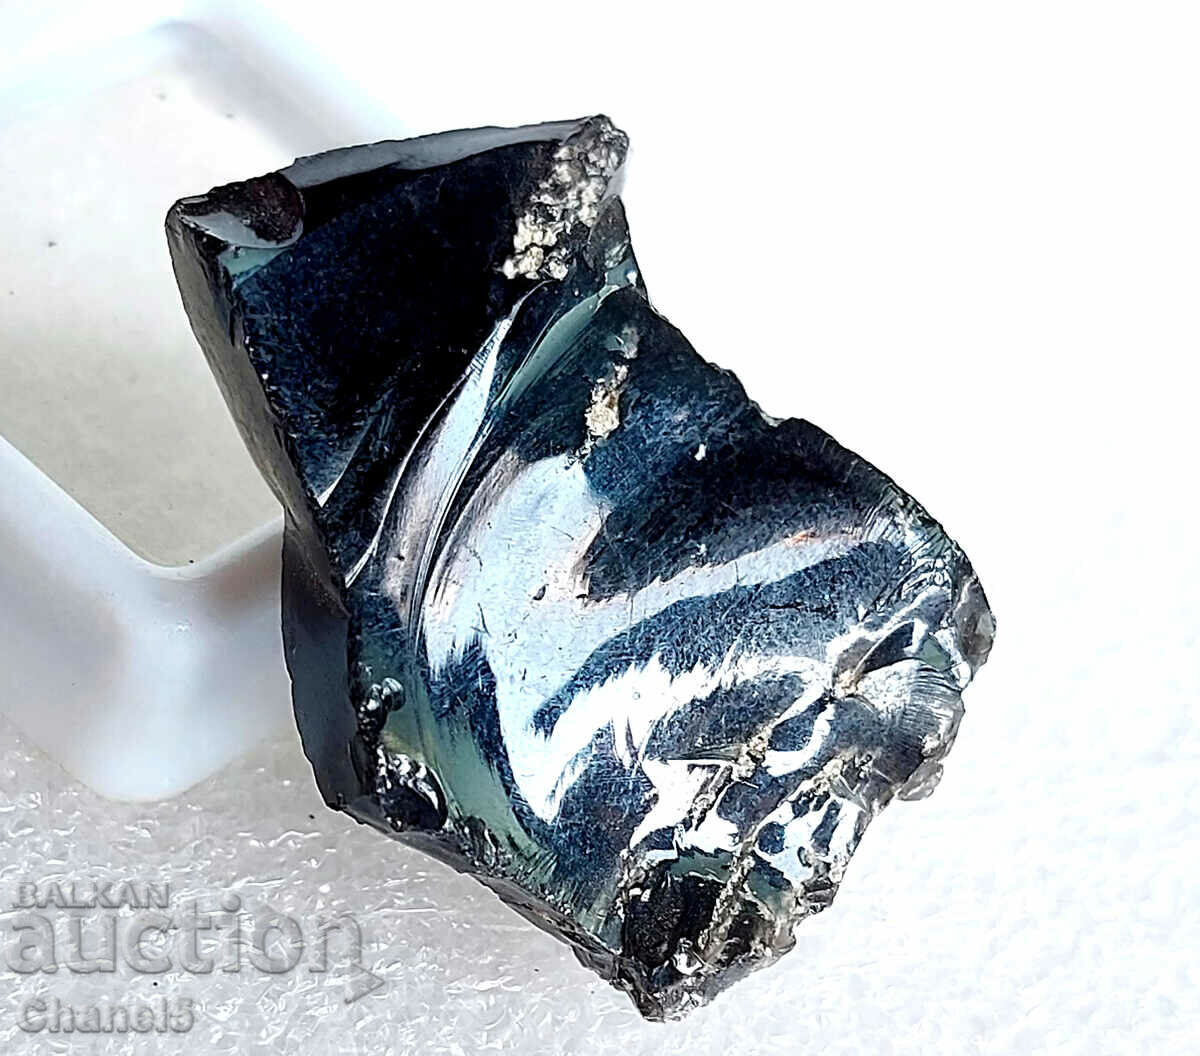 NATURAL BLACK OBSIDIAN - MEXICO - 55.85 carats (326)